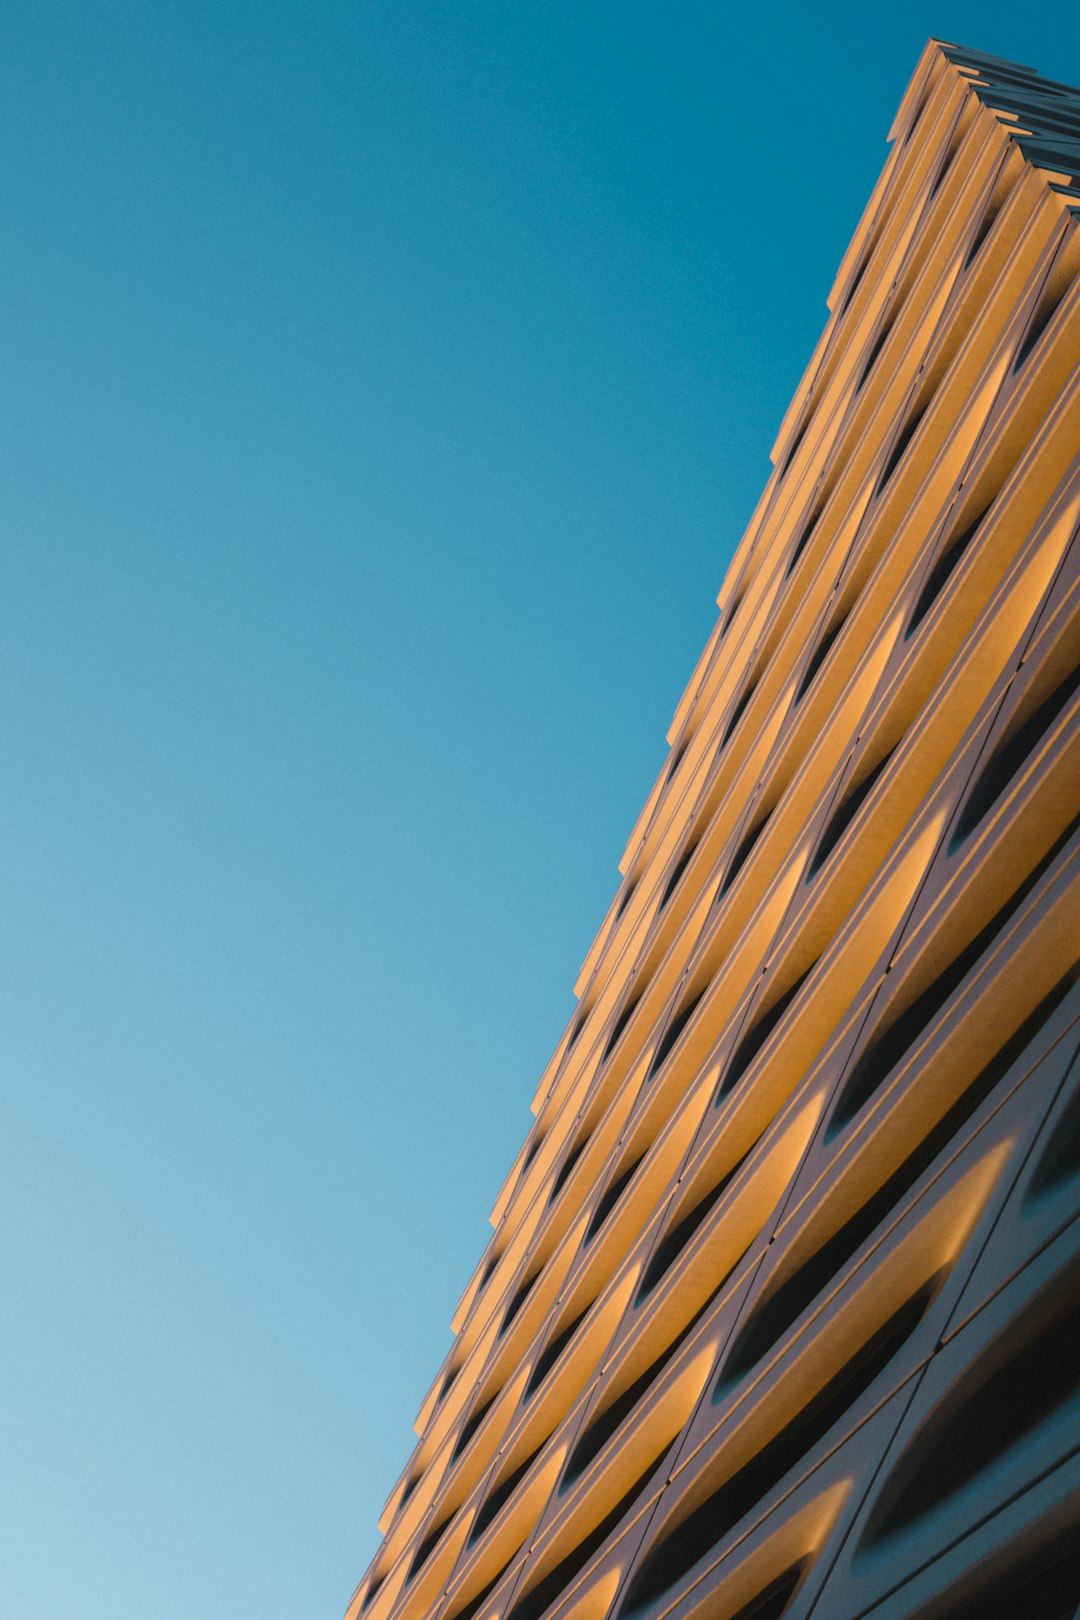 brown wooden building under blue sky during daytime